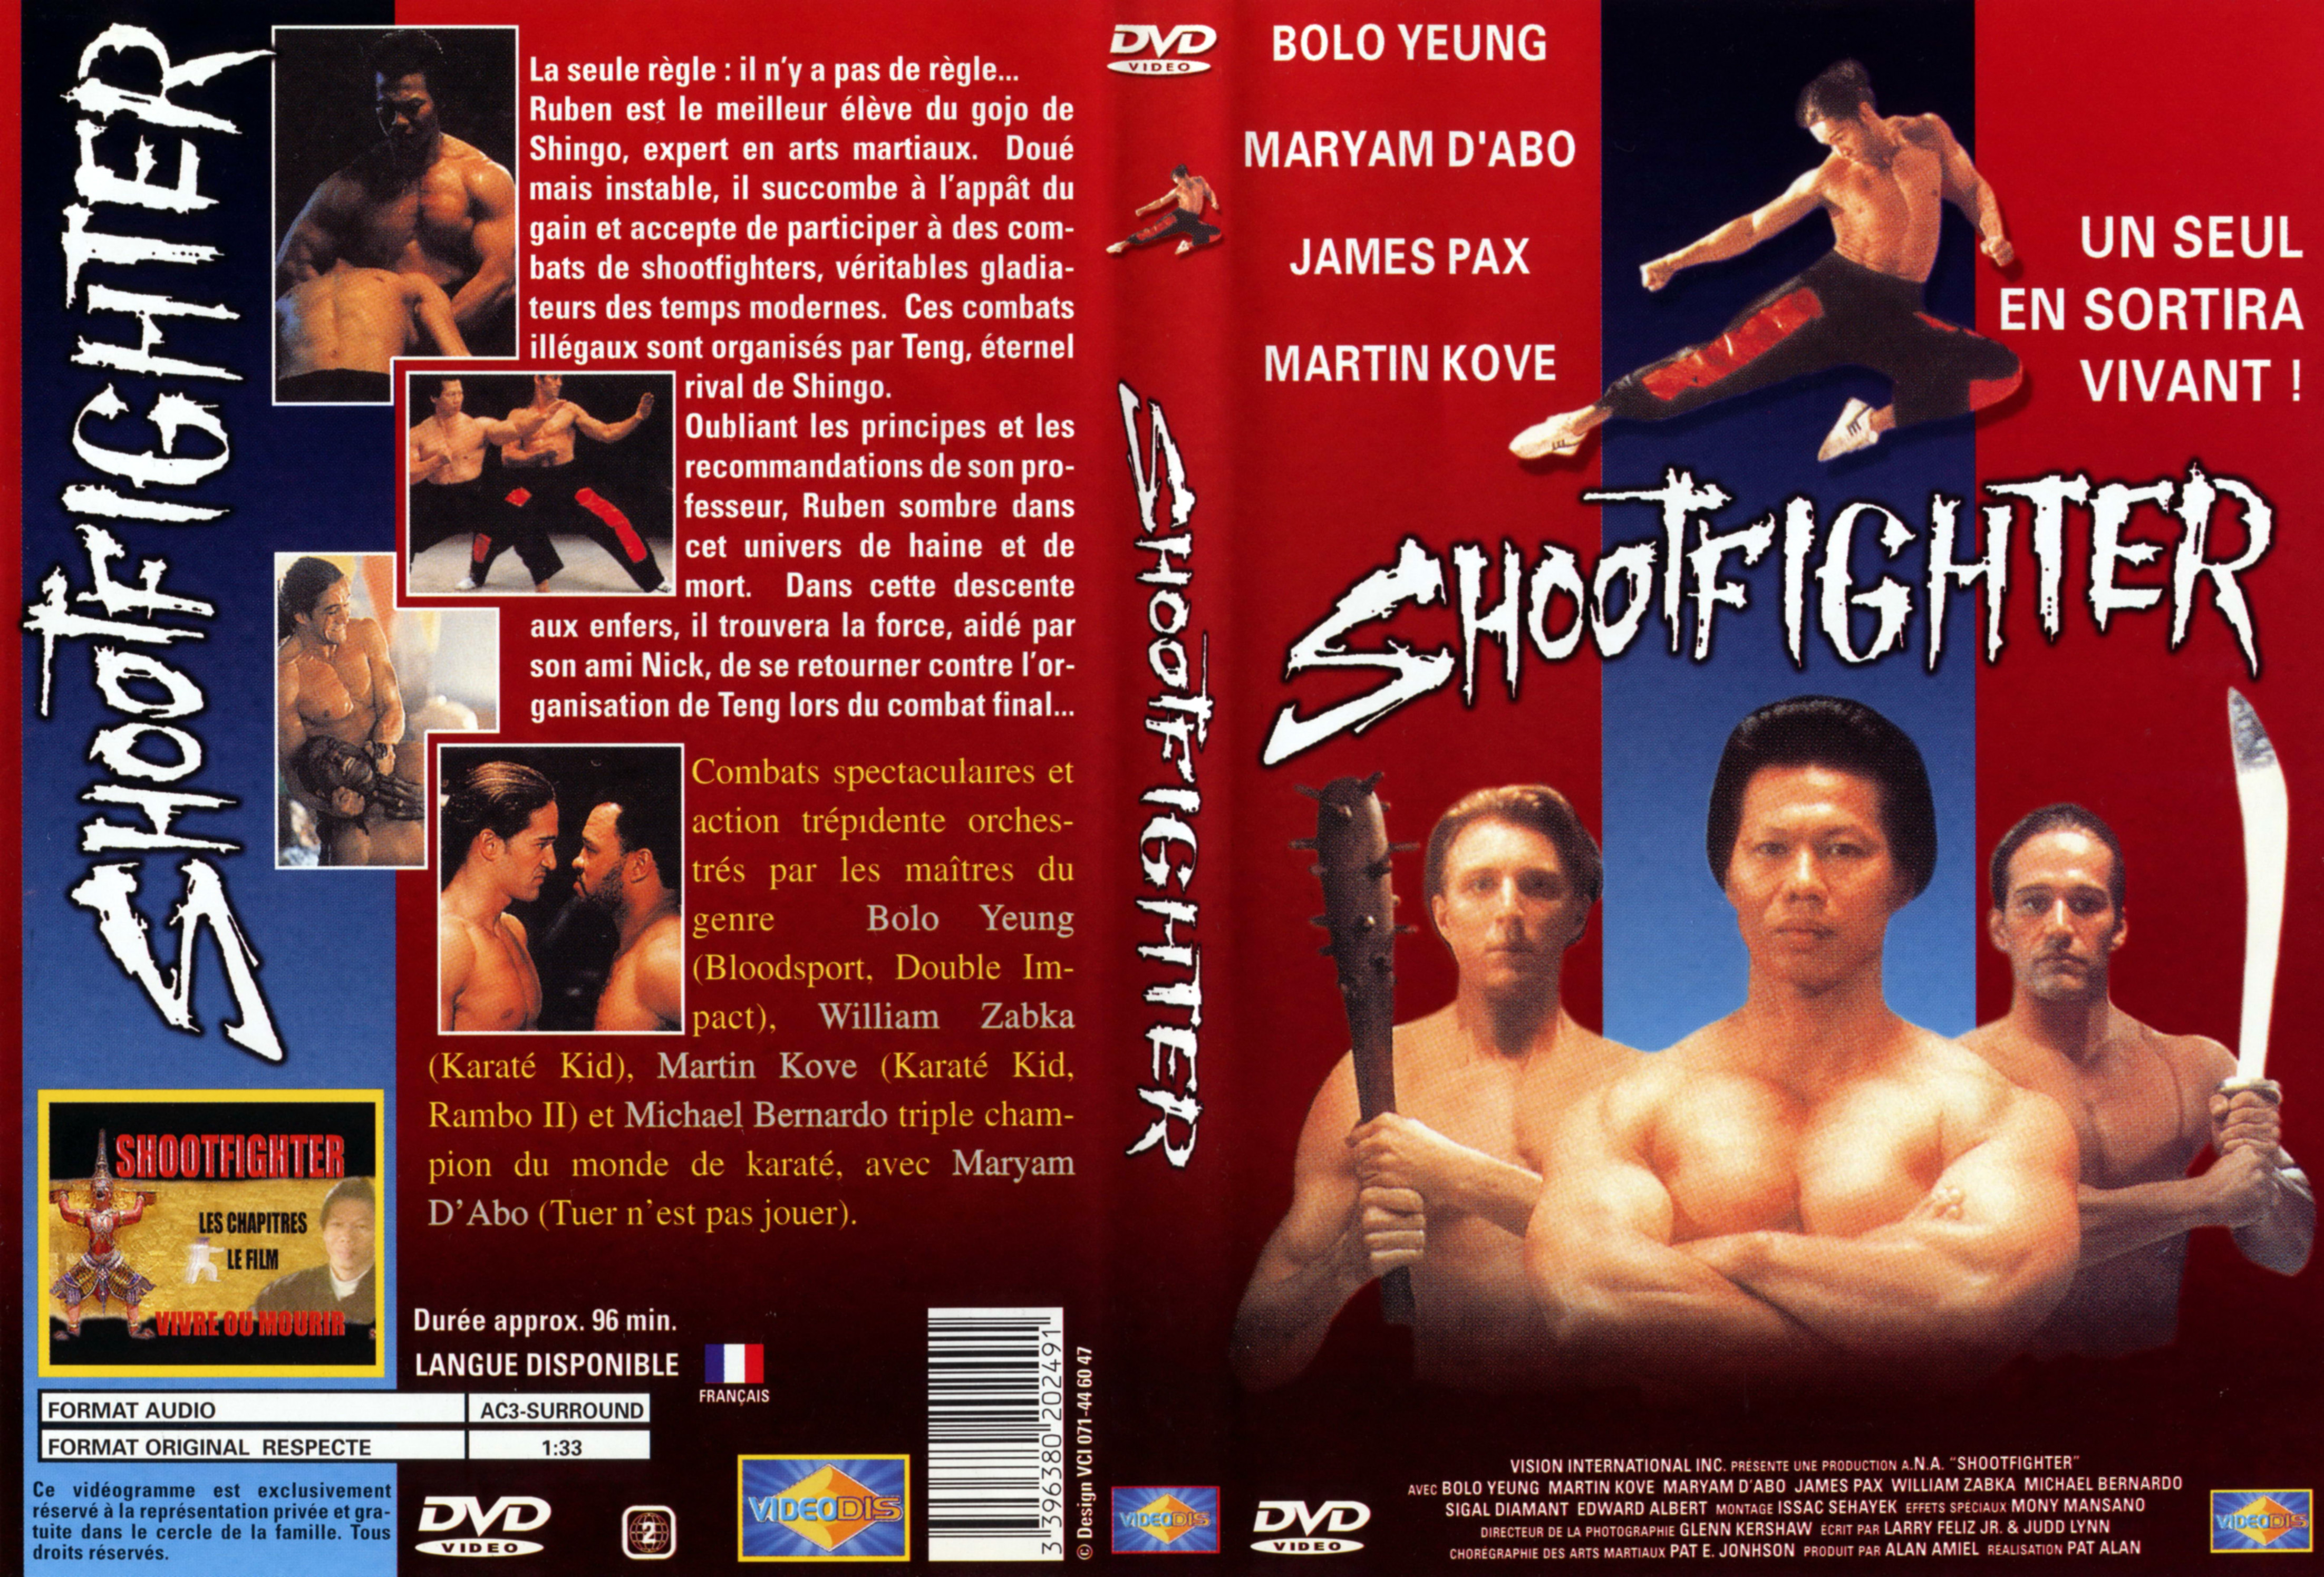 Jaquette DVD Shootfighter v2